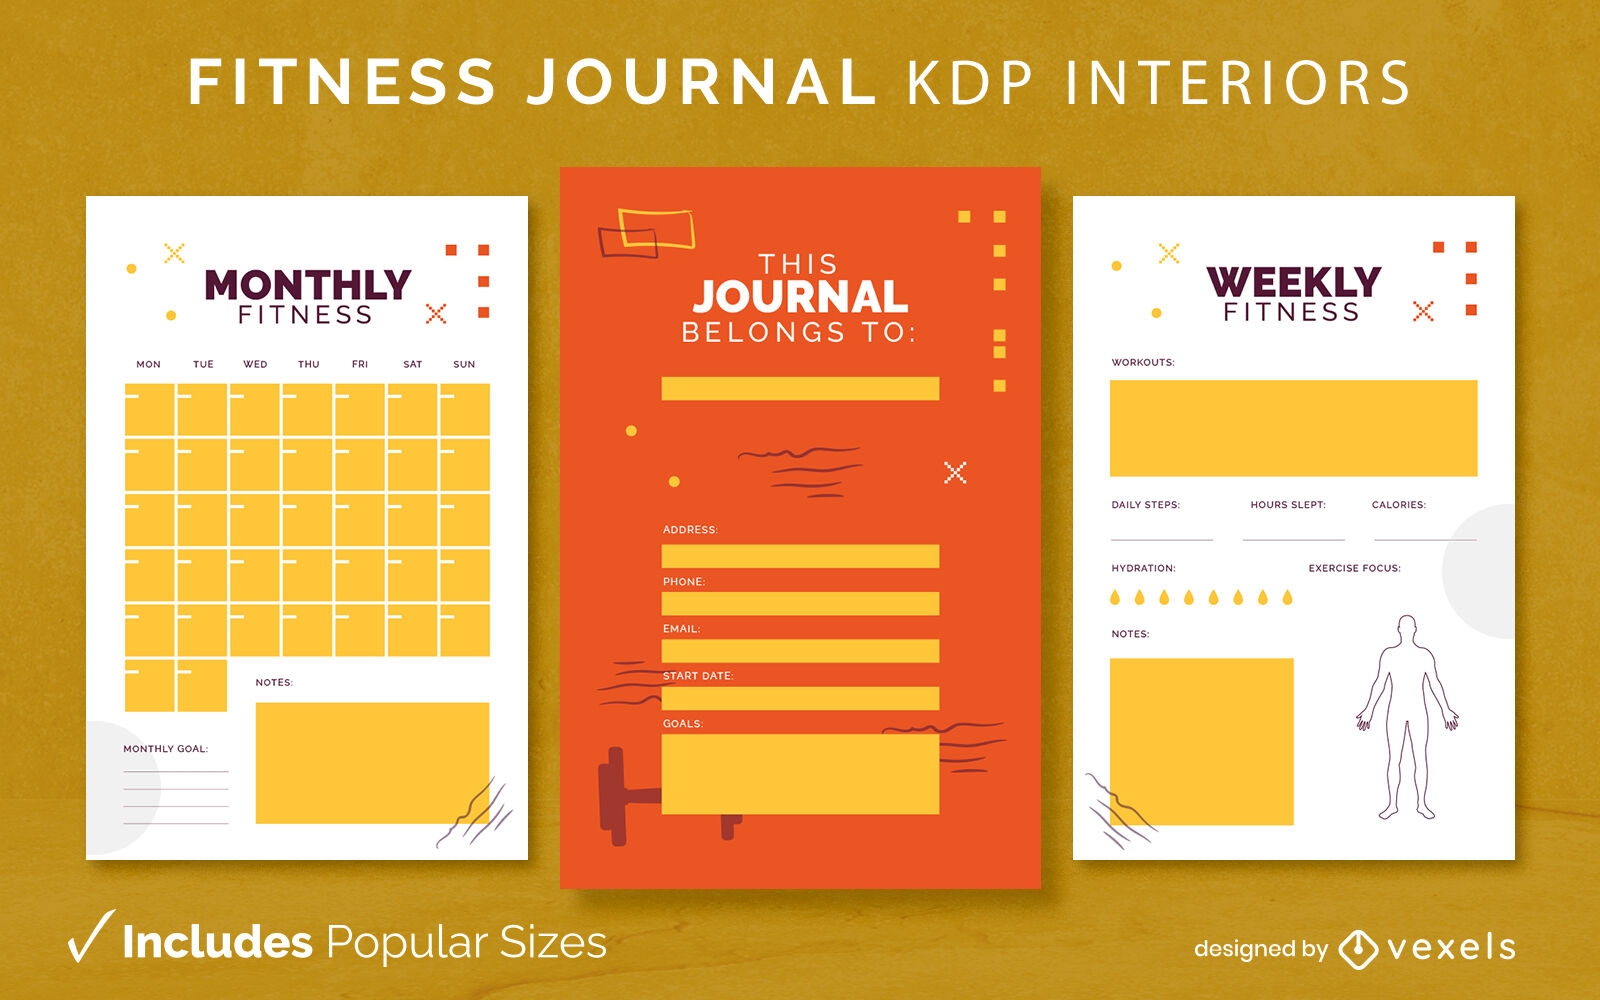 Fitness journal template KDP interior design